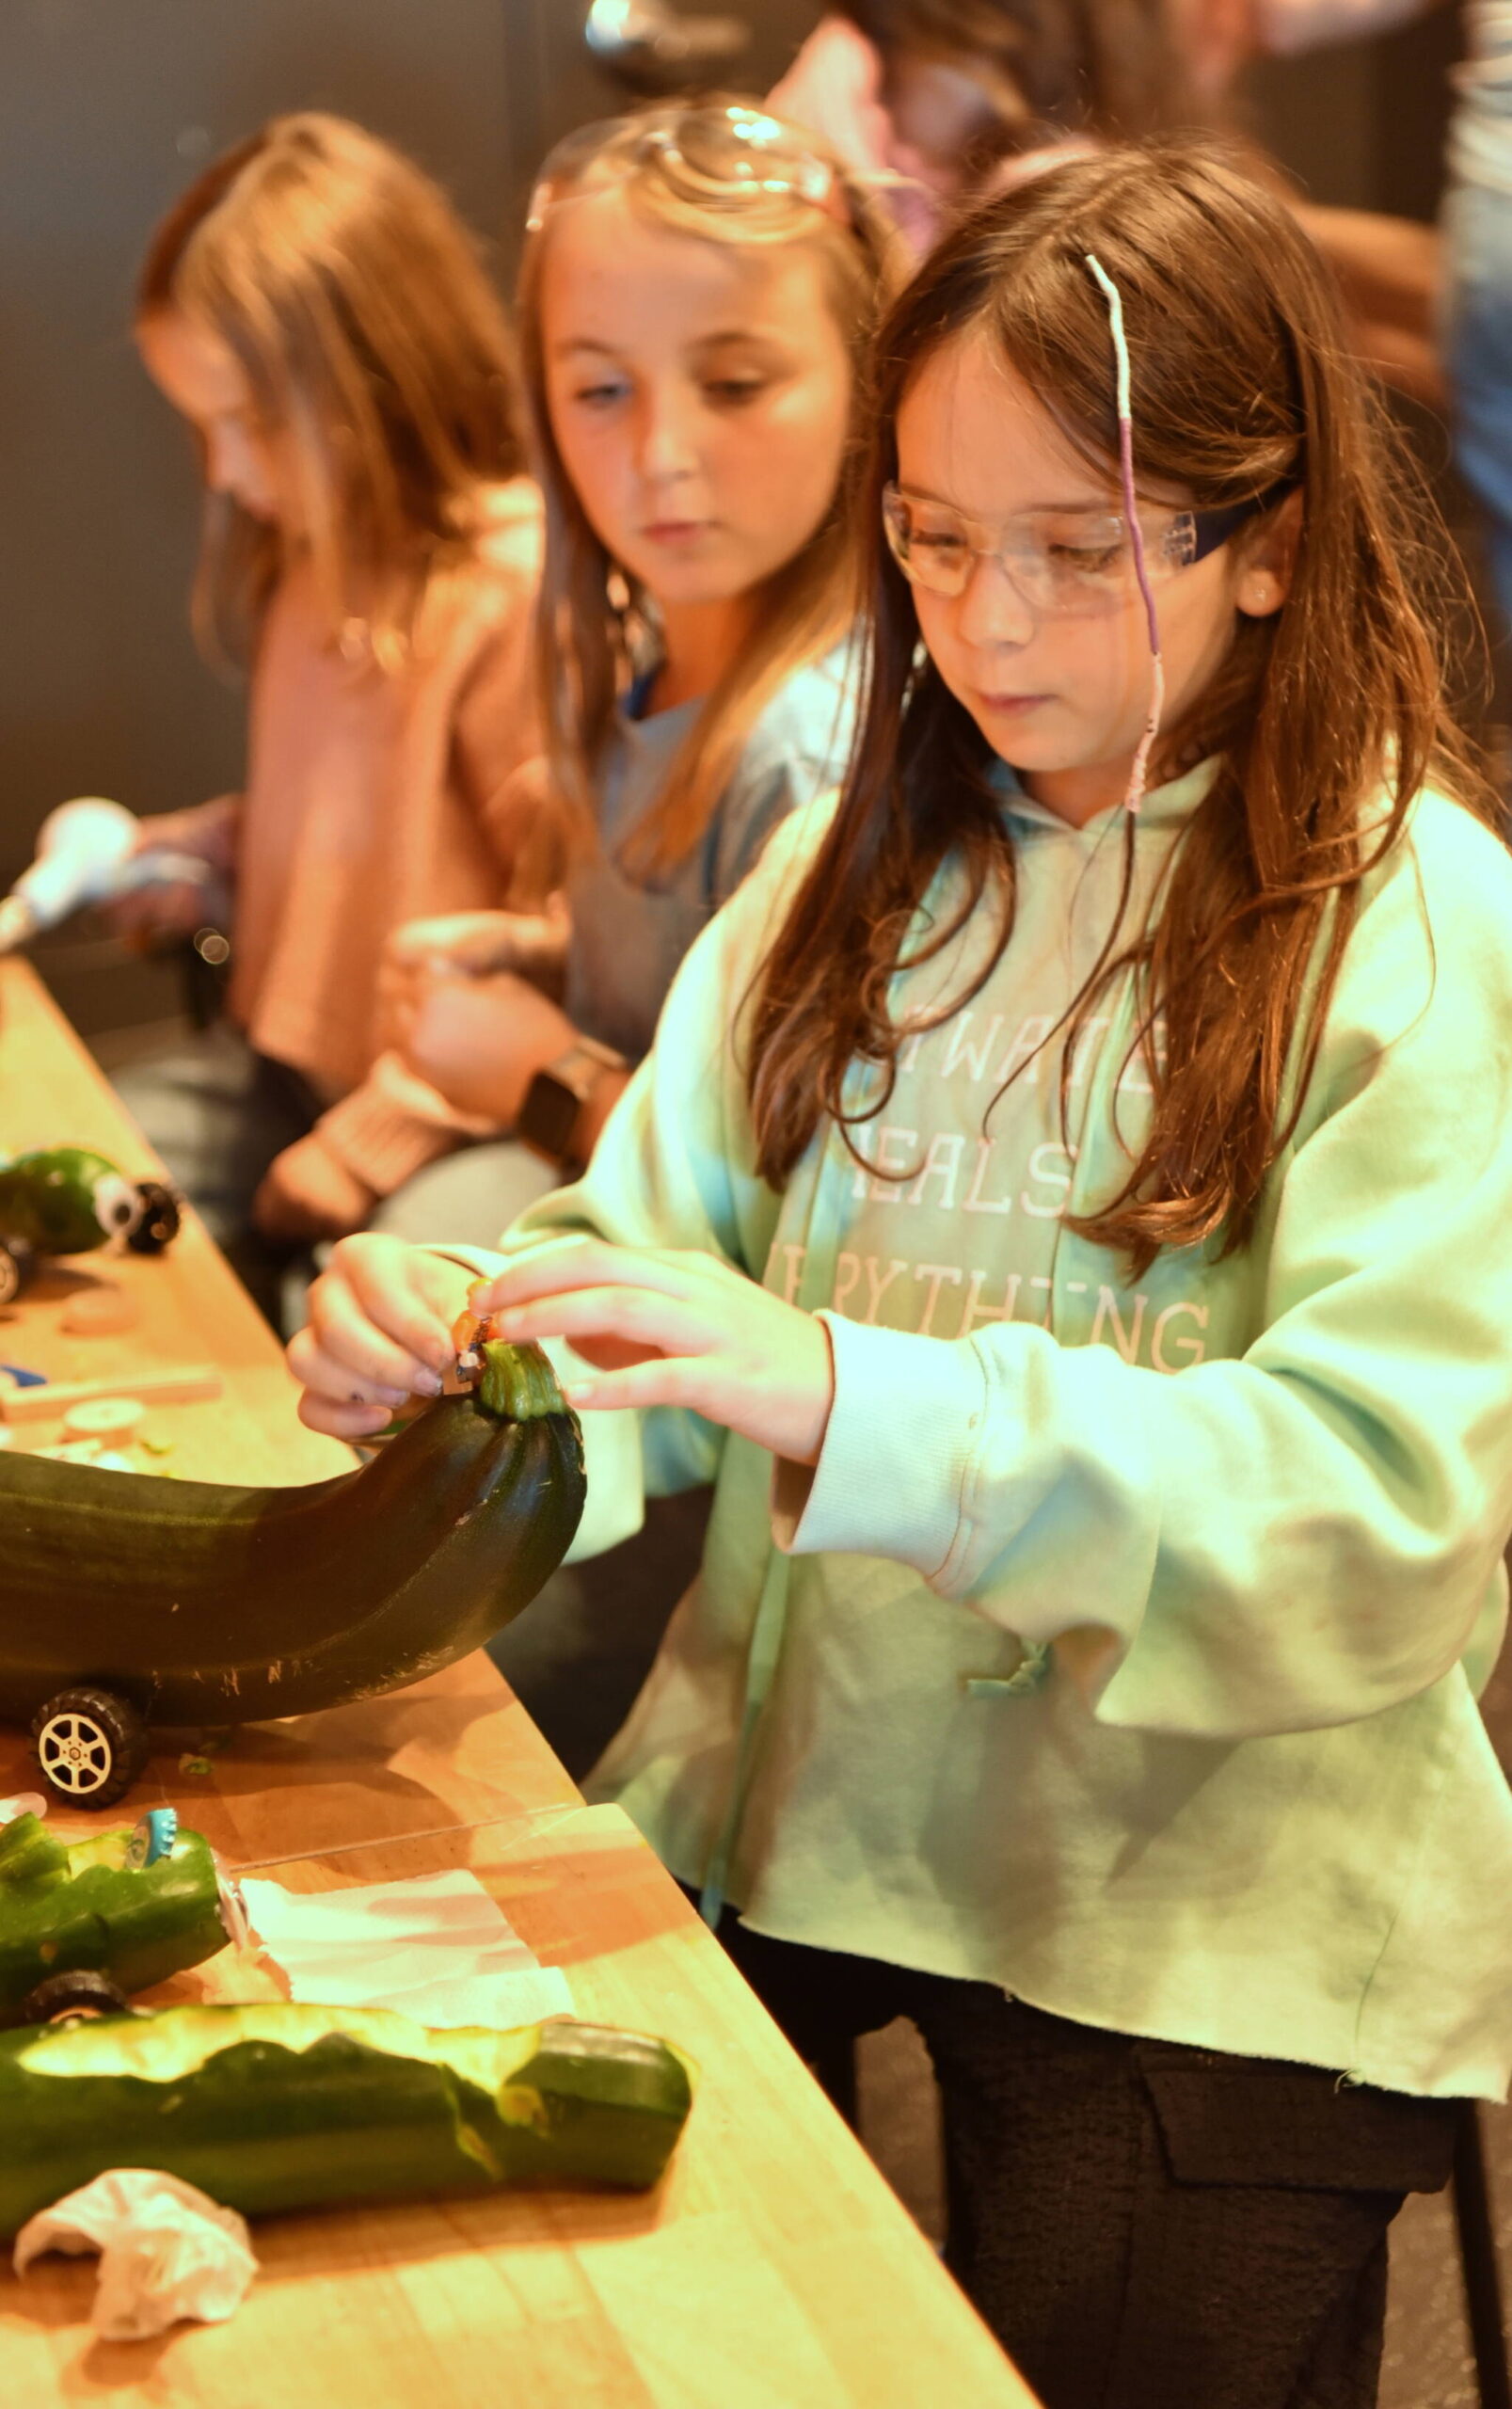 Blakely Elementary student Sage Dikman works on her zucchini car as Hanna-Lisa Barlak looks on.